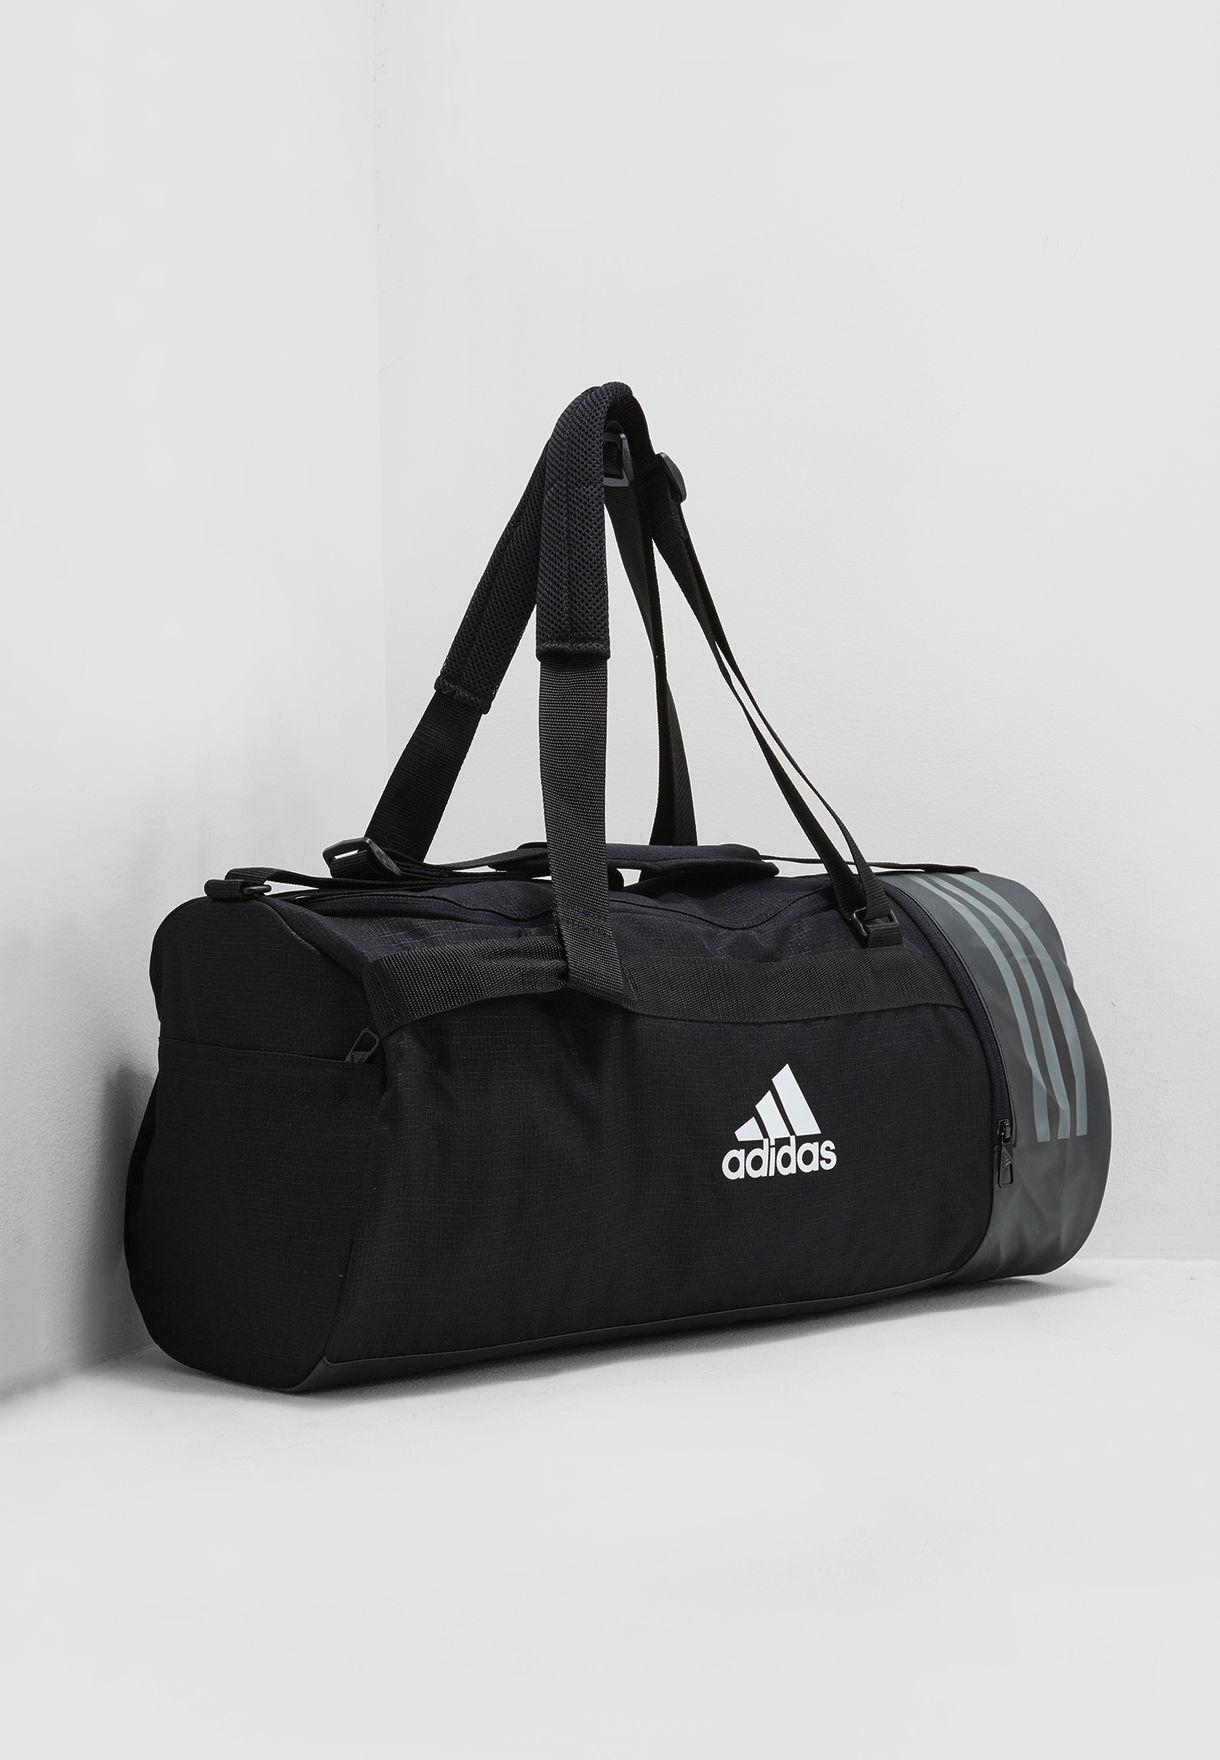 adidas Originals Adidas Convertible 3 Stripes Medium Duffel Bag in Black |  Lyst